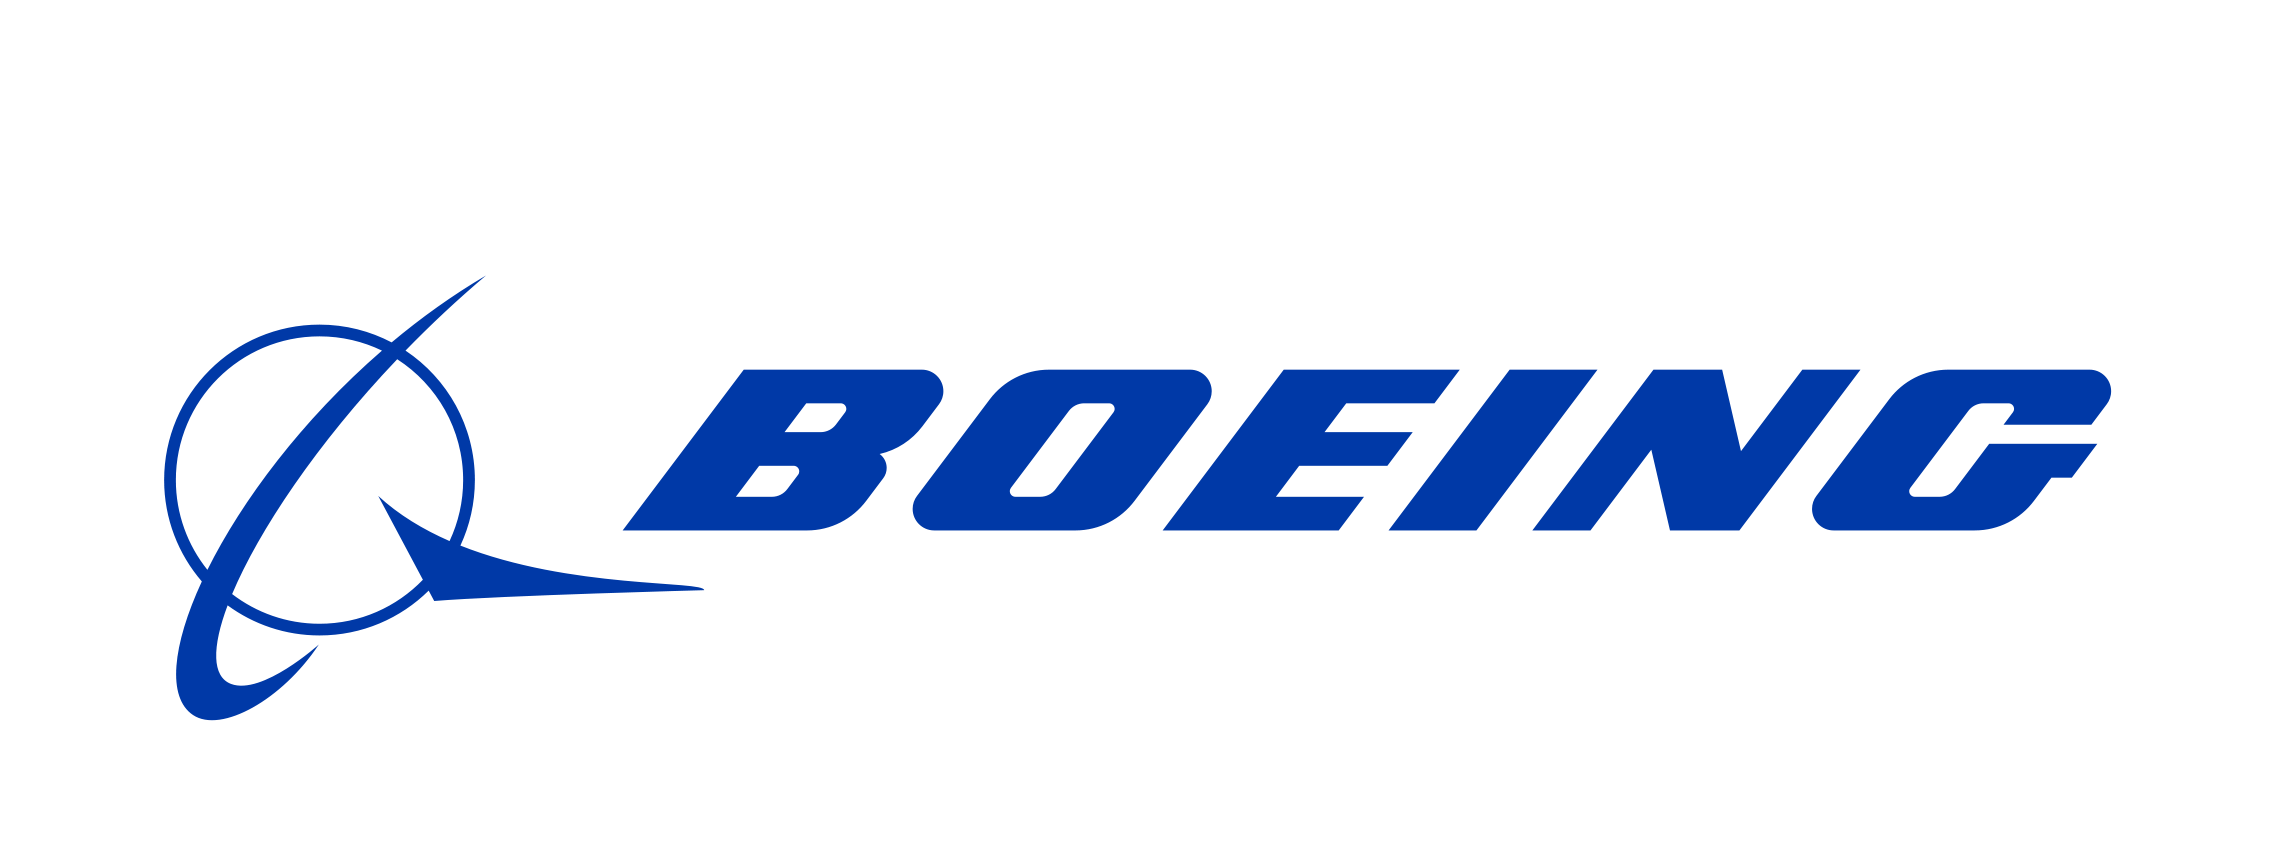 Winnipeg Logo - Boeing: Boeing Canada